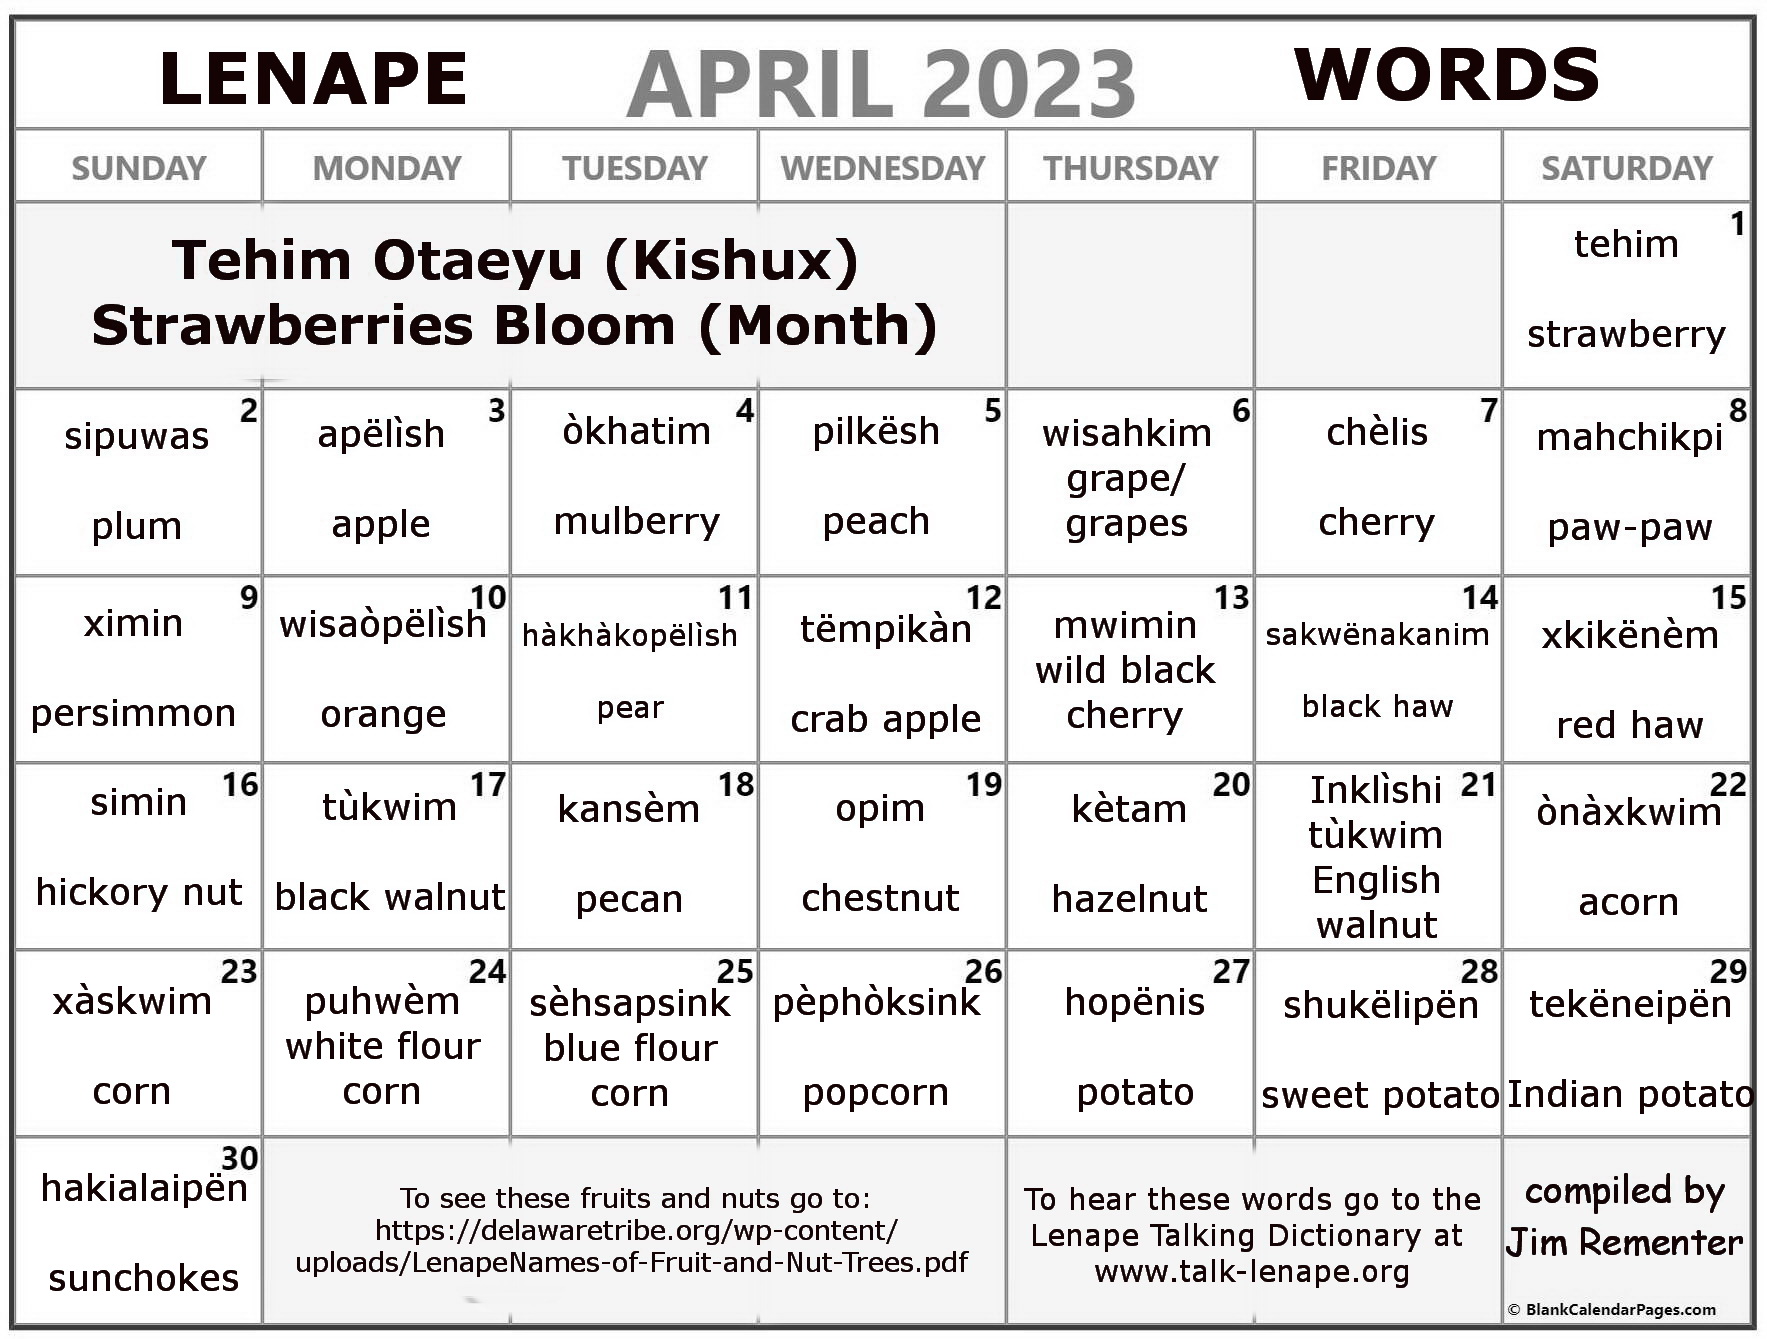 April 2023 Lenape Word-a-Day Calendar